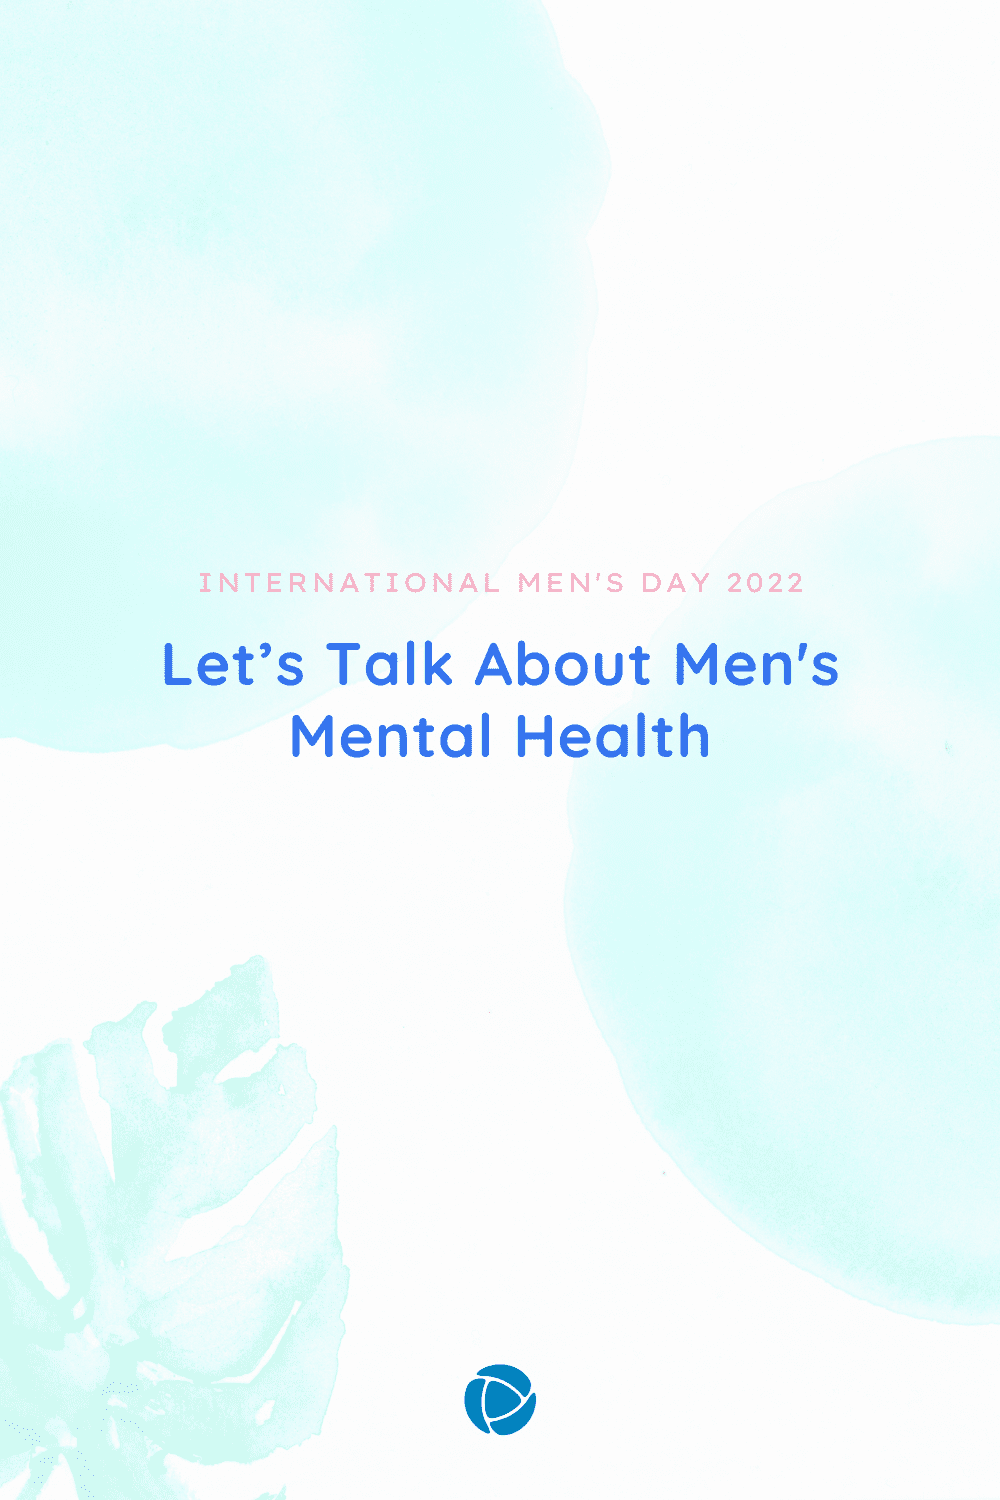 Let’s Talk About Men’s Mental Health